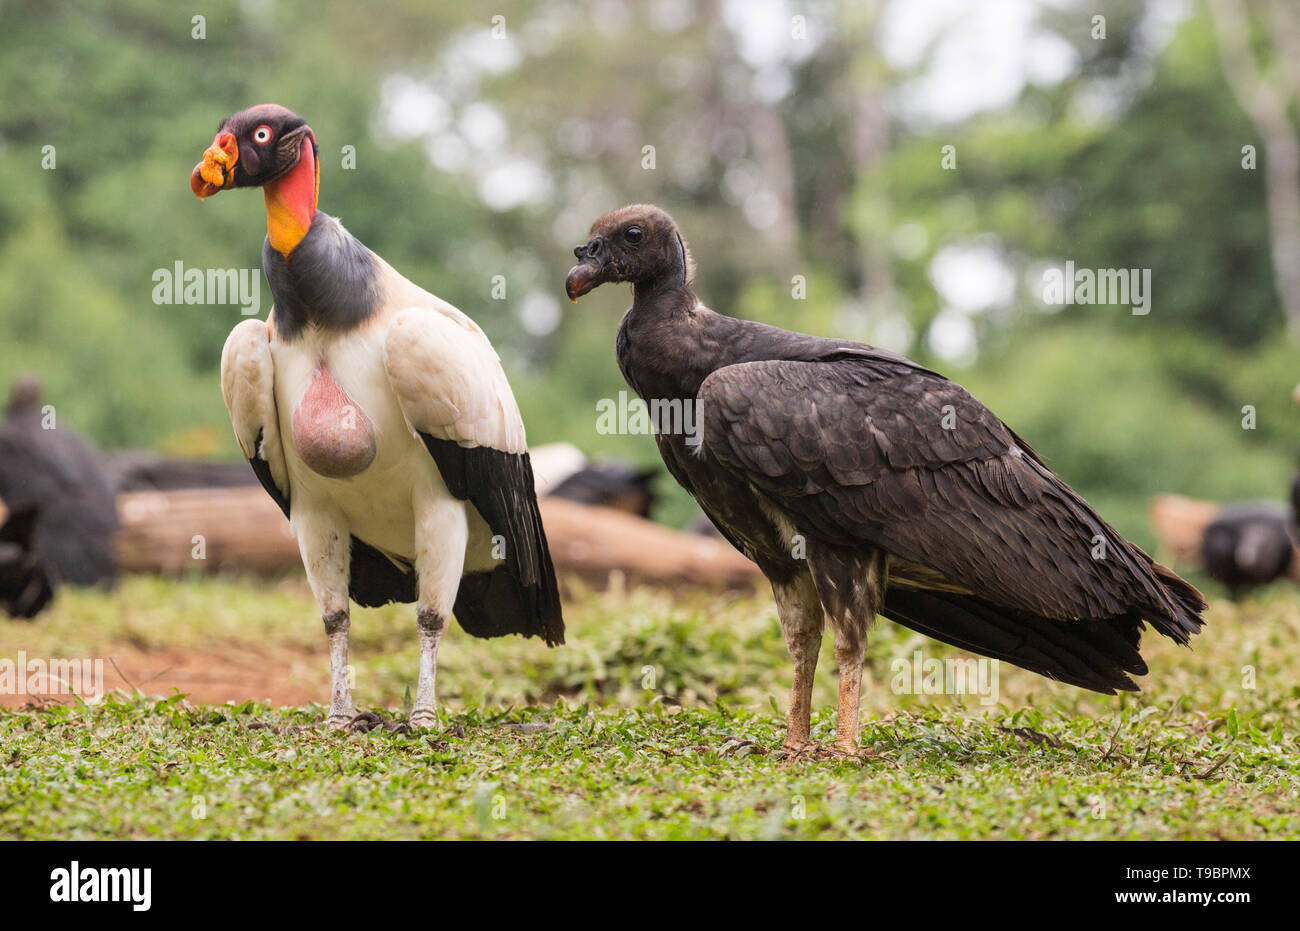 King Vulture, immature bird feeding on ground, Laguna de Lagarto, Costa Rica 30 March 2019 Stock Photo